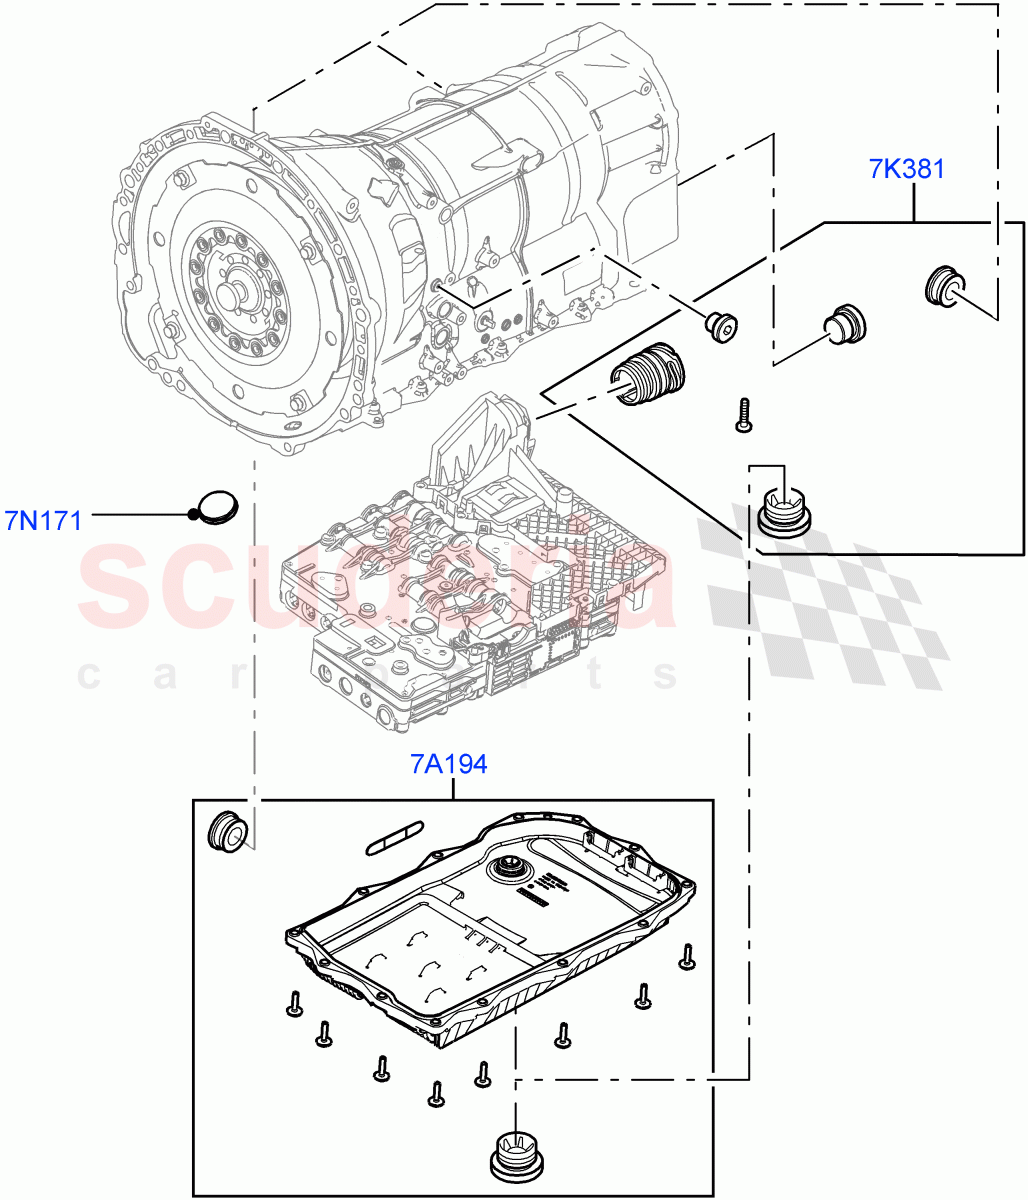 Transmission External Components(Nitra Plant Build)(2.0L I4 DSL HIGH DOHC AJ200,8 Speed Auto Trans ZF 8HP70 4WD,5.0 Petrol AJ133 DOHC CDA)((V)FROMK2000001) of Land Rover Land Rover Defender (2020+) [3.0 I6 Turbo Petrol AJ20P6]